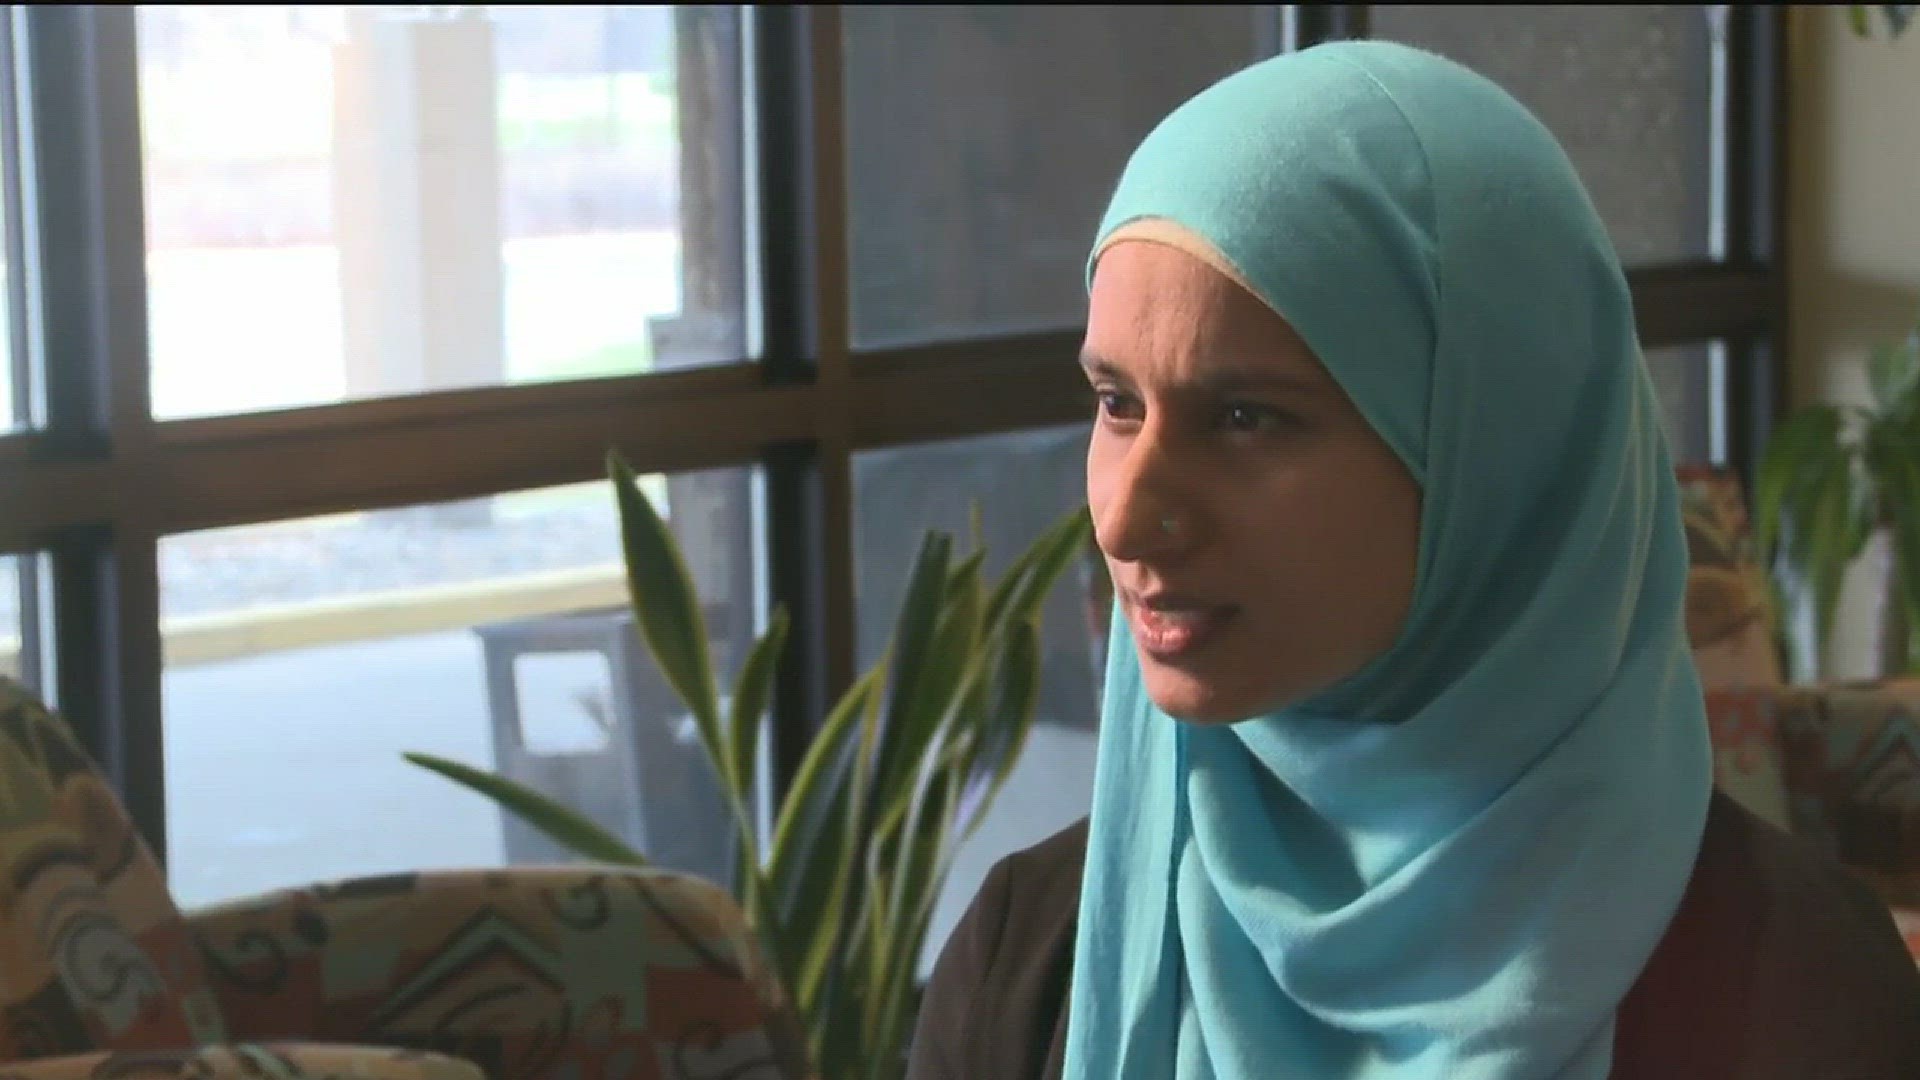 BTN11: RISE empowering Muslim women